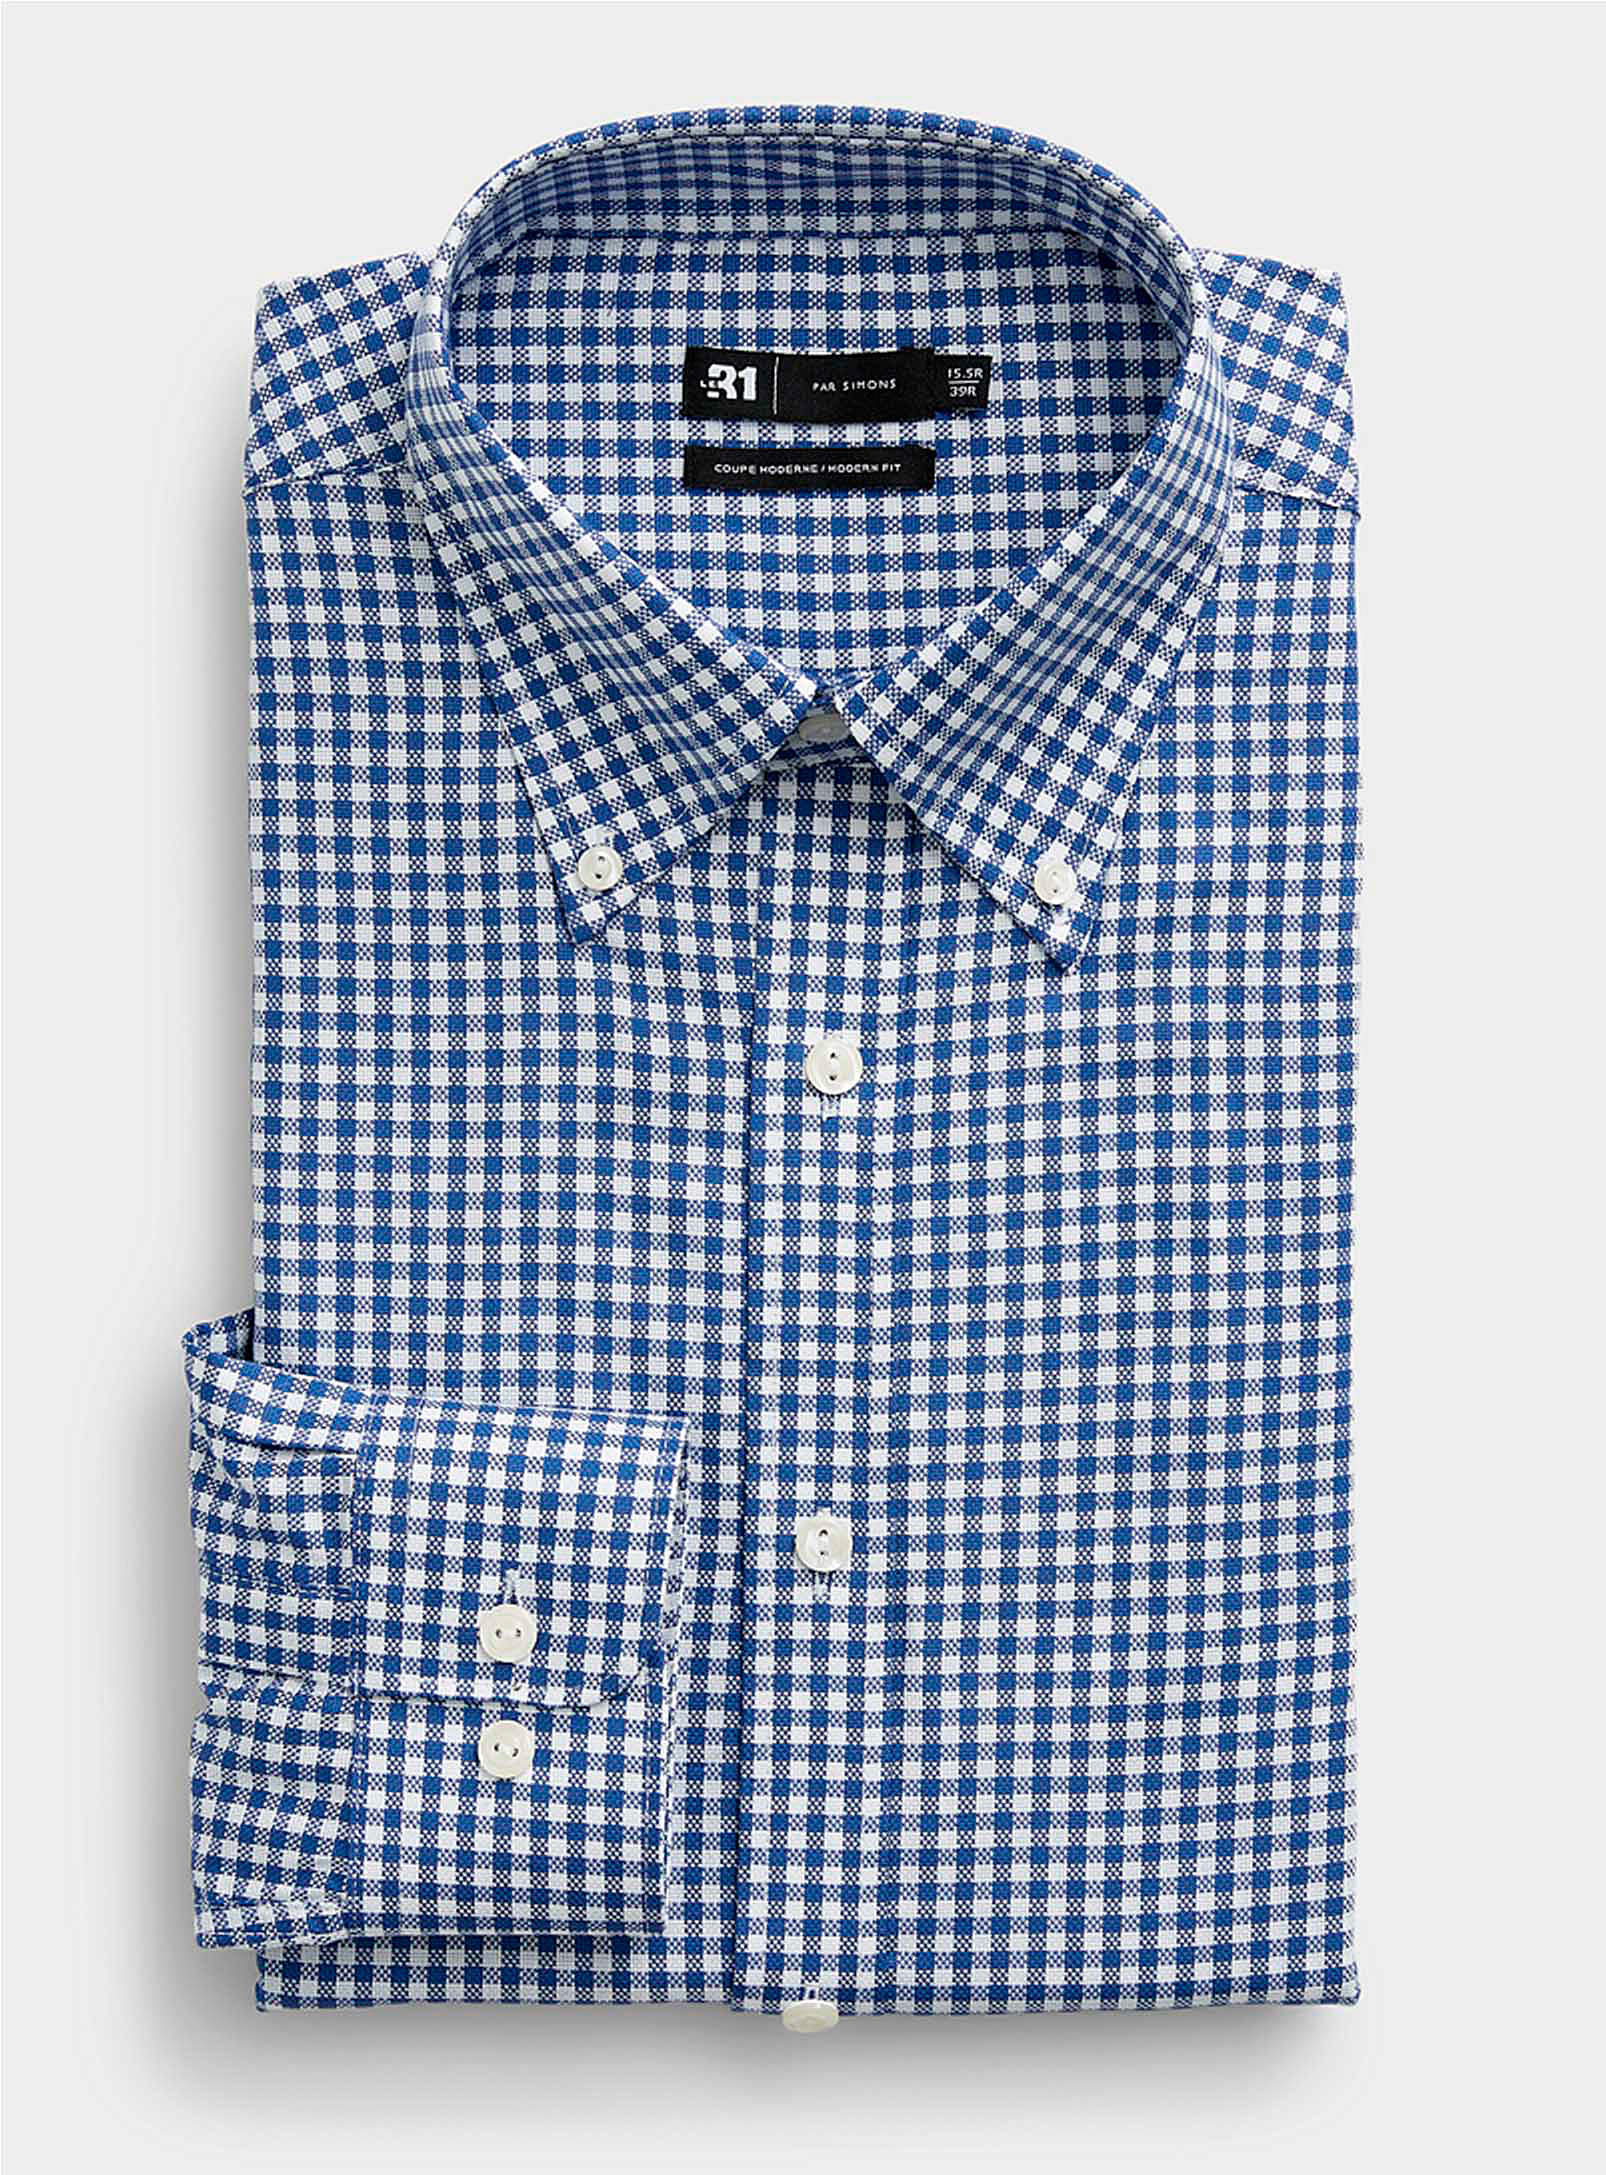 Le 31 - Men's Organic cotton gingham shirt Modern fit